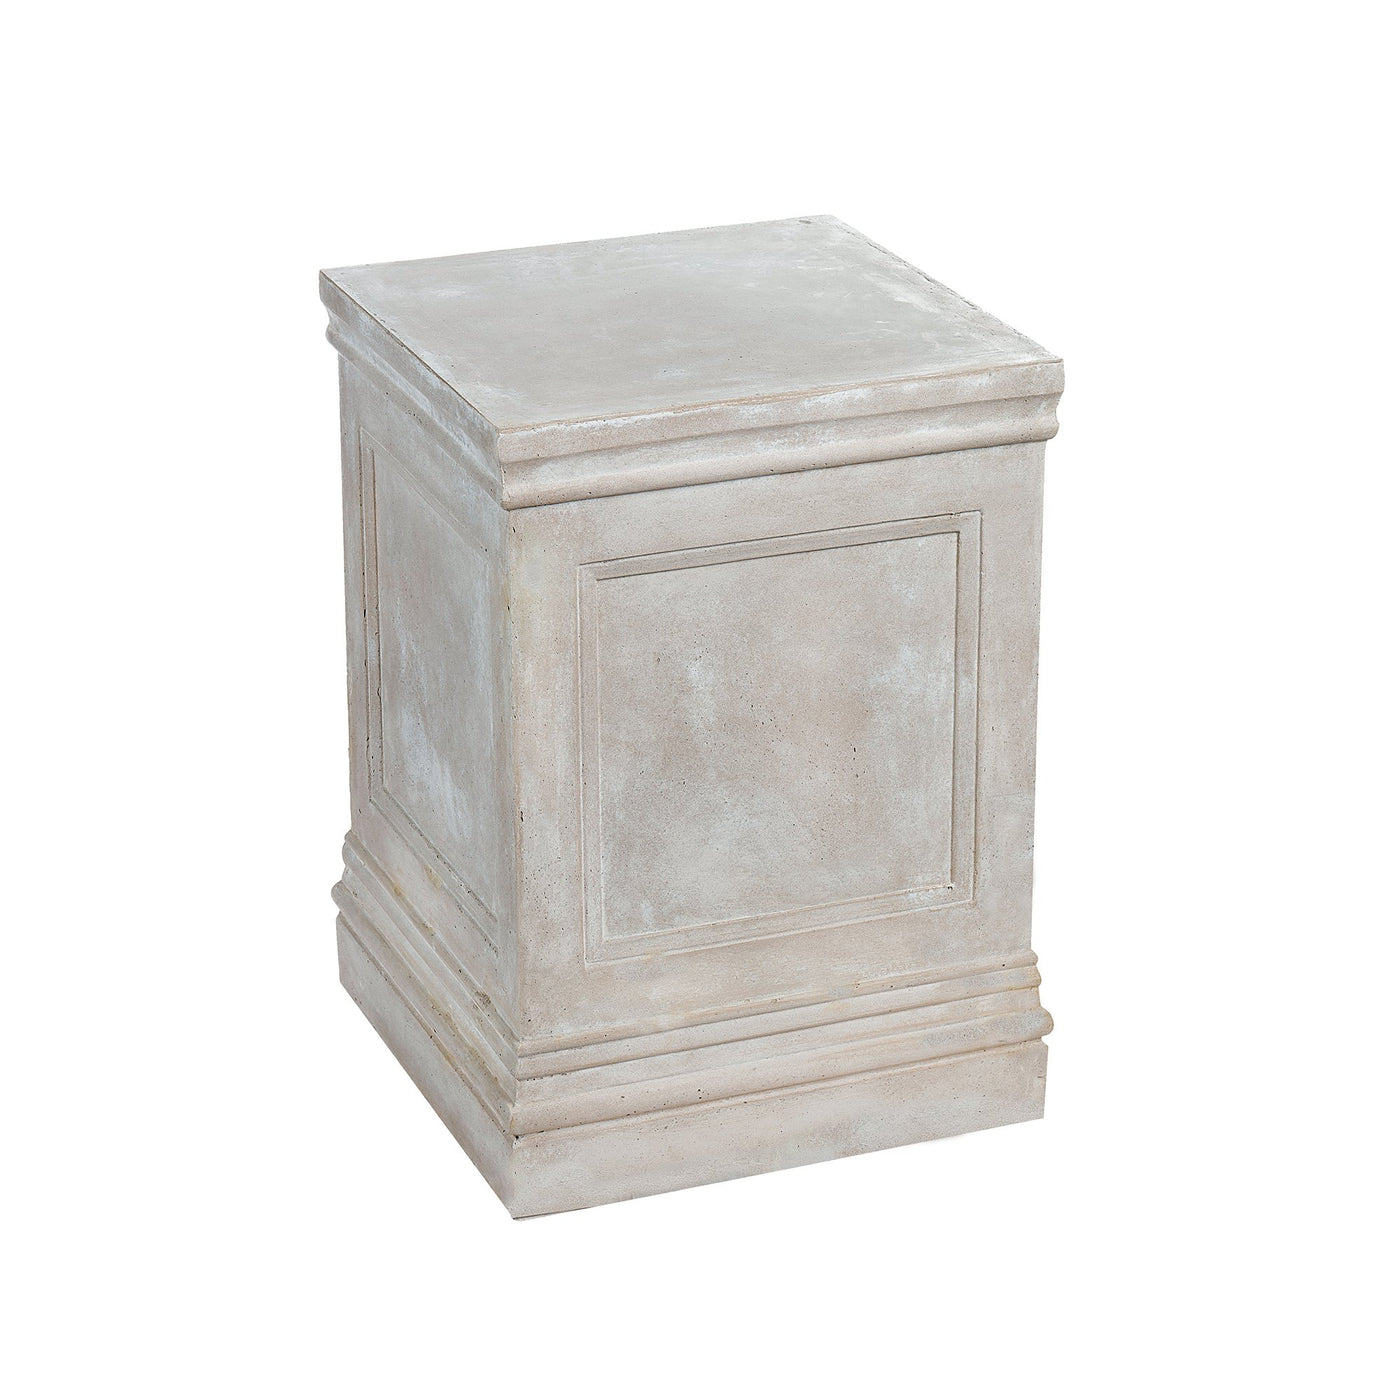 Square stonecast pedestal in light grey